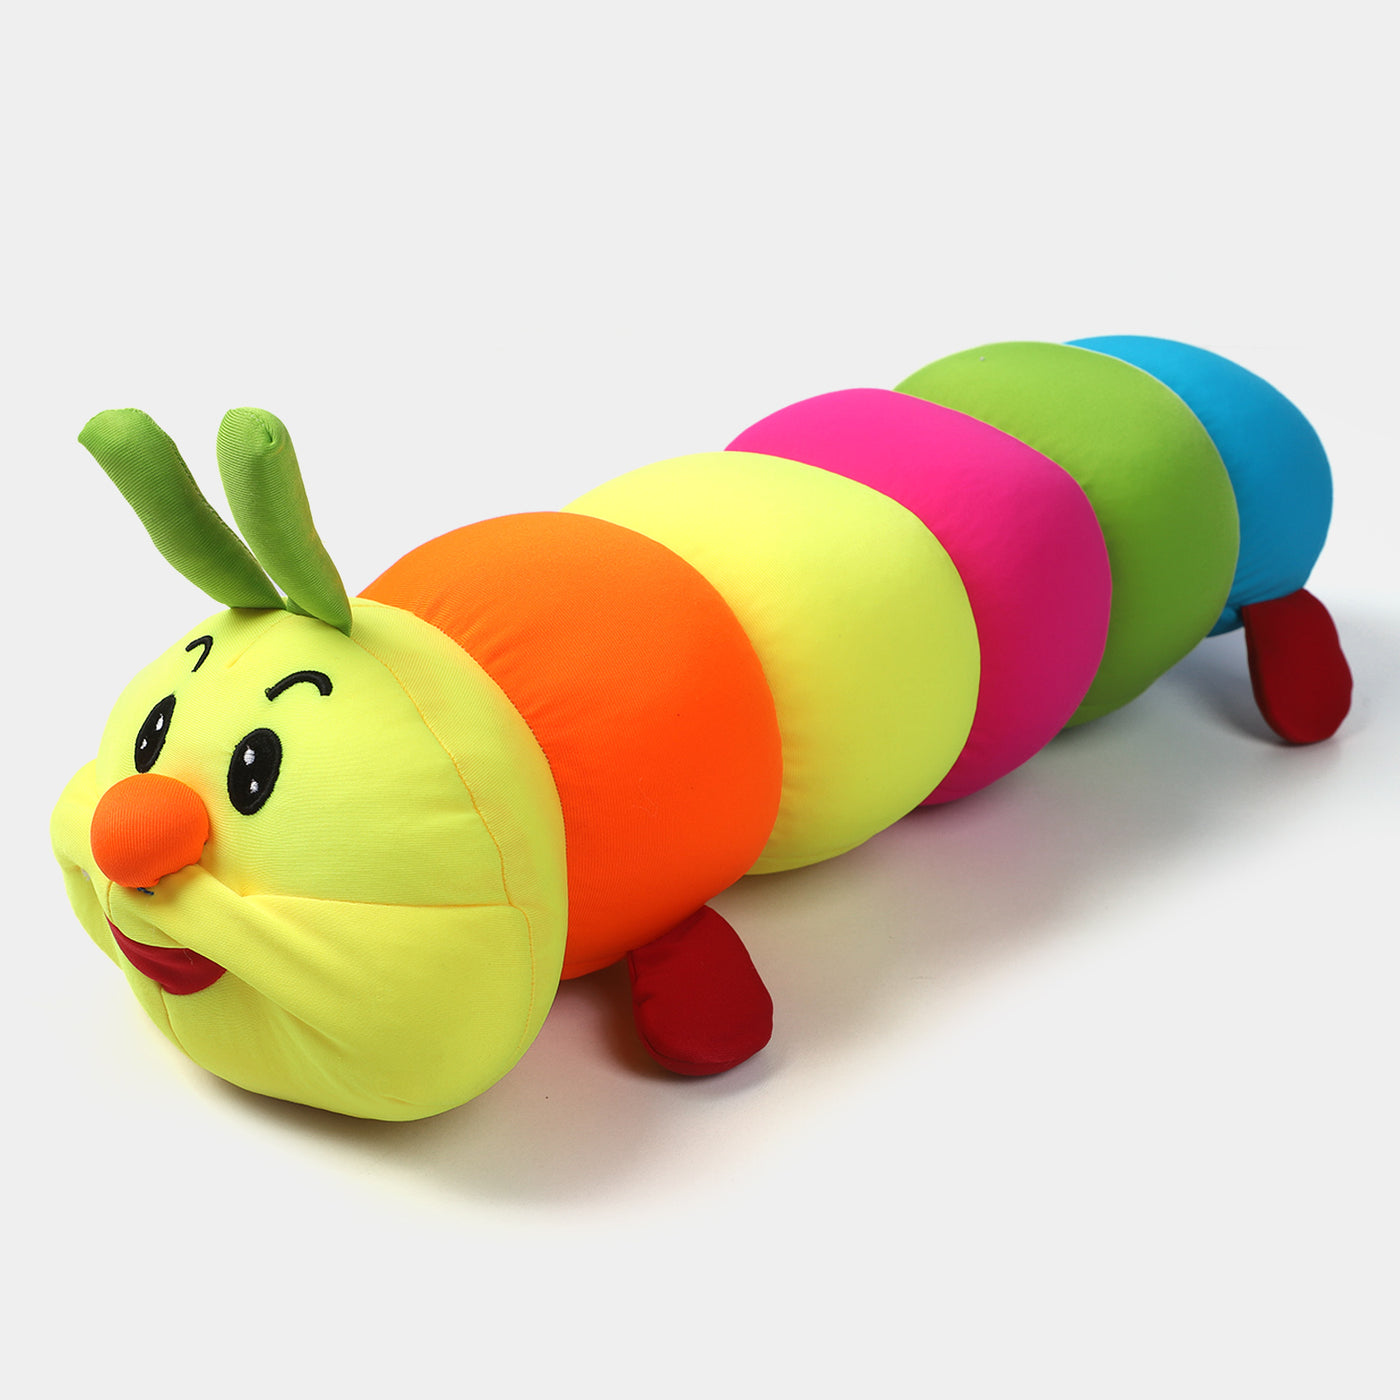 Soft Bean Caterpillar Toy - Multi